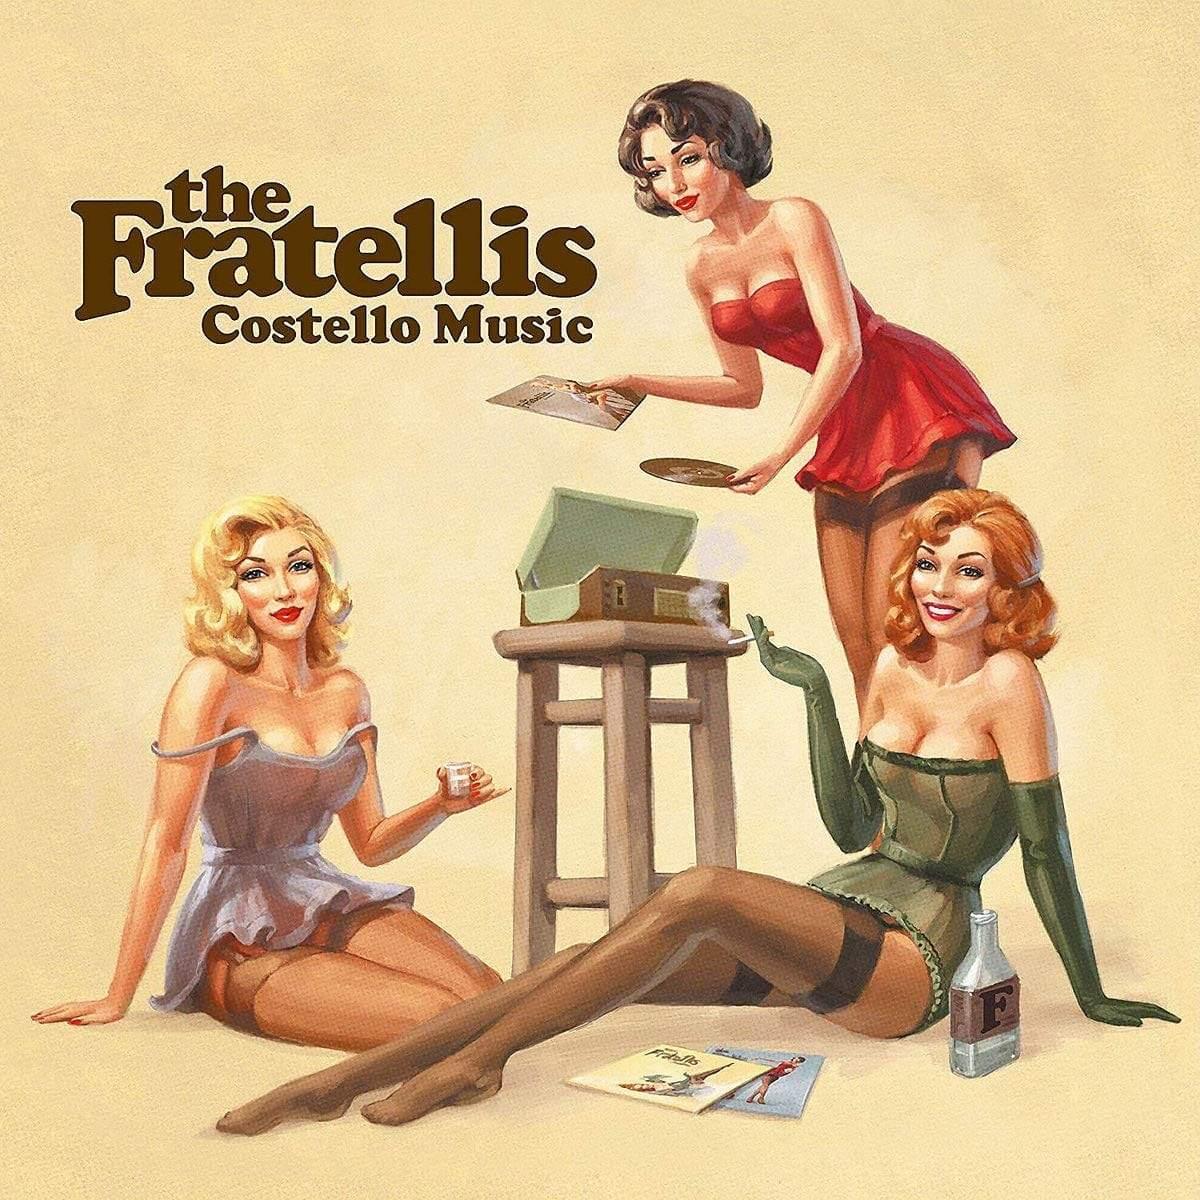 The Fratellis - Costello Music (Limited Import, 180 Gram) (LP) - Joco Records